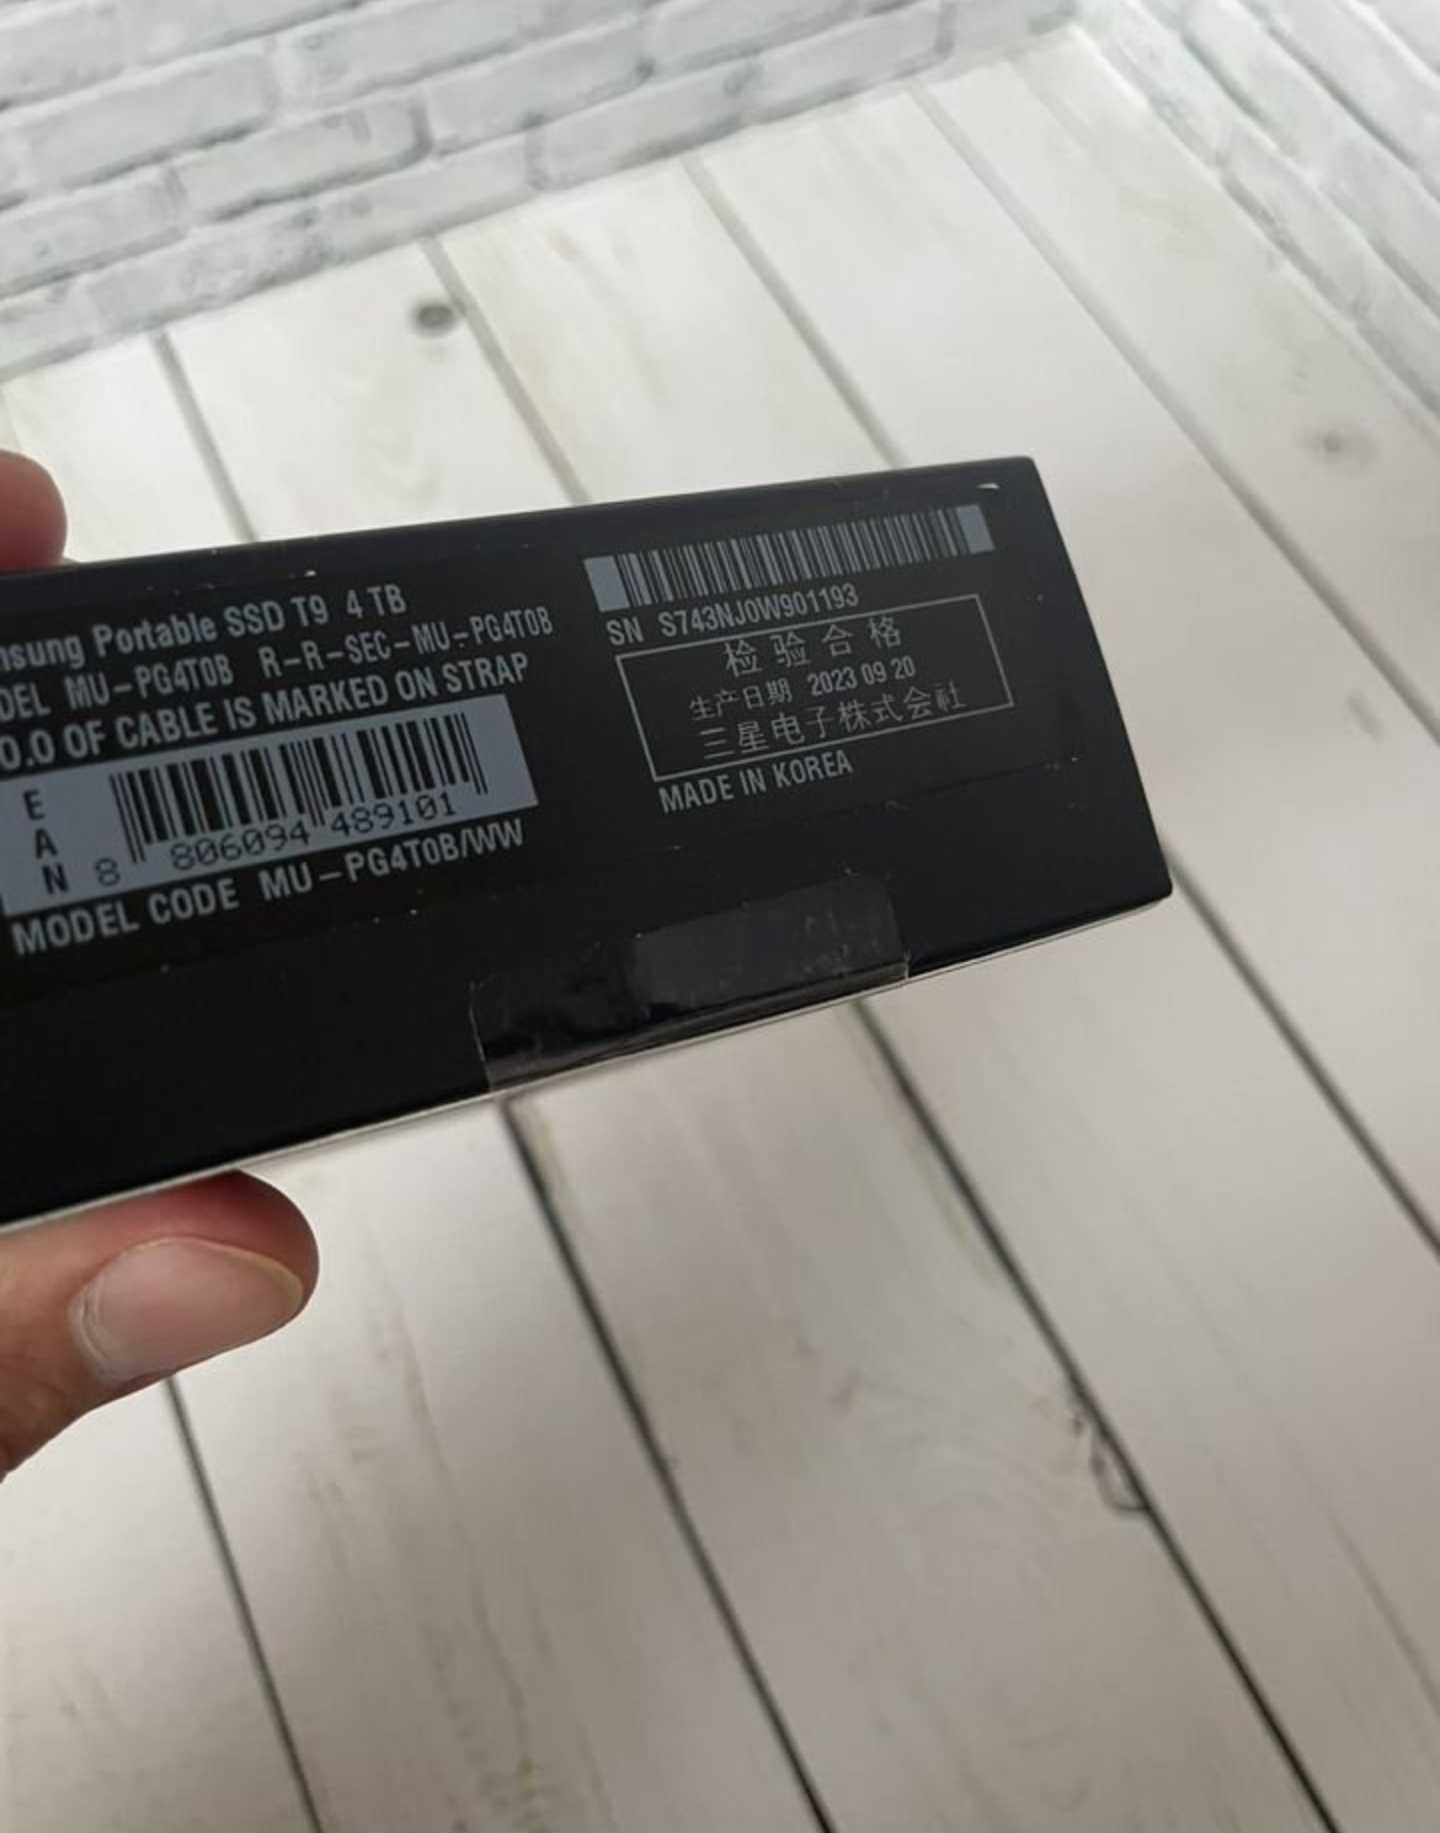 Samsung SSD Portable T9 4tb